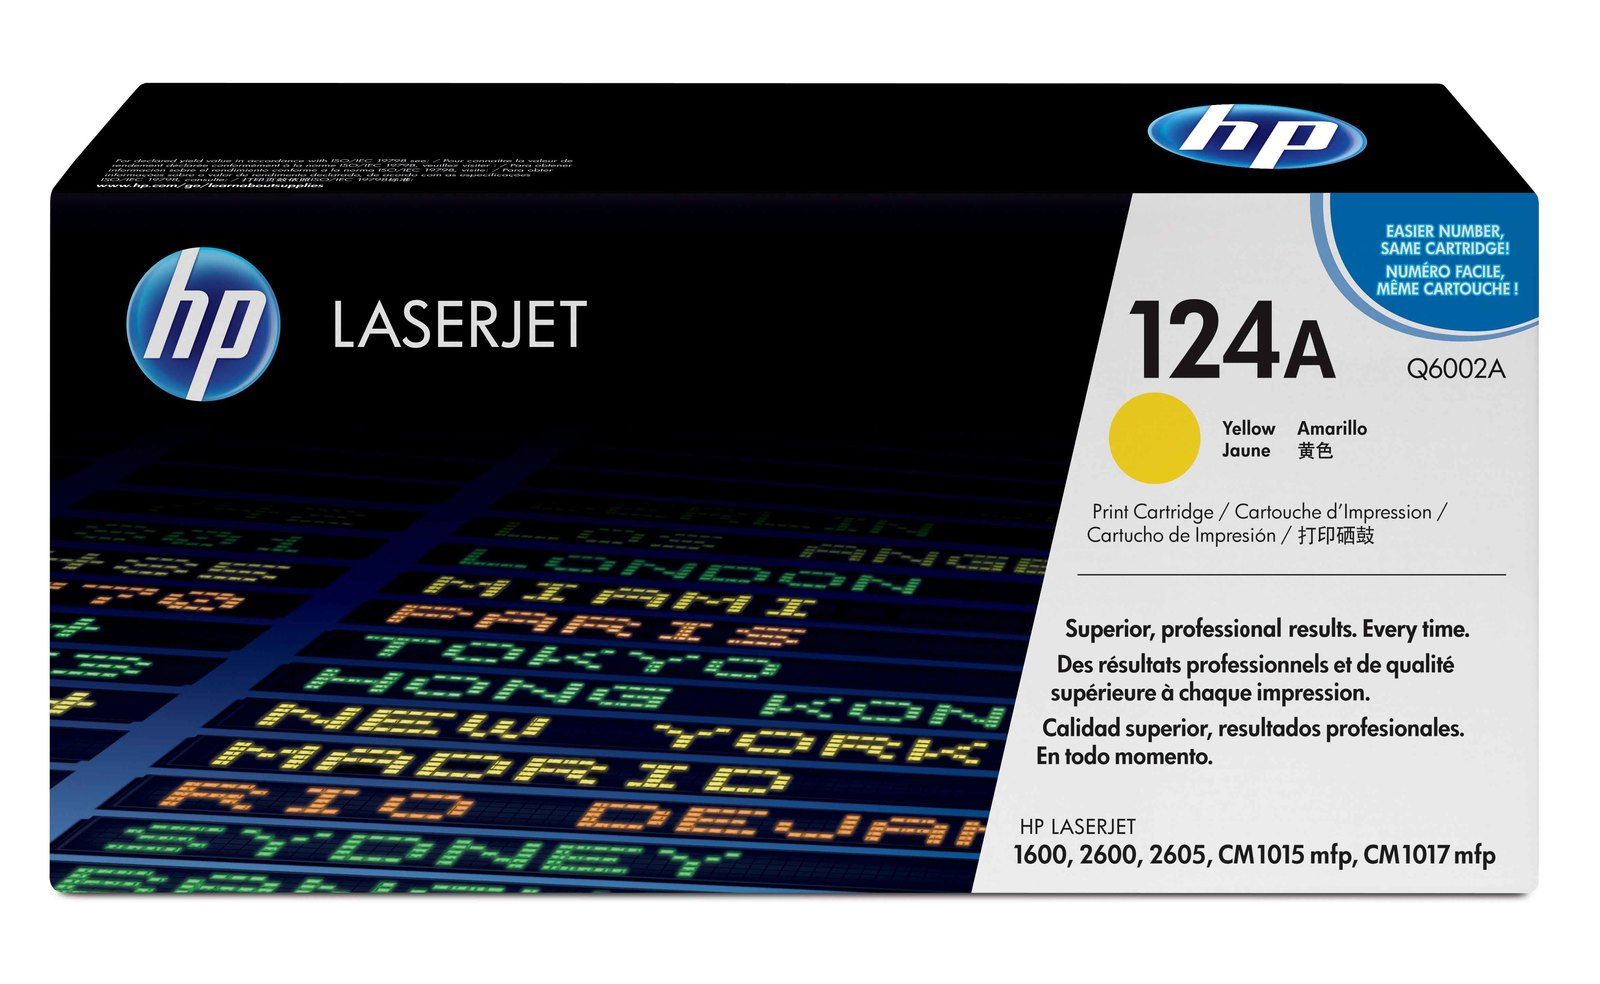 HP LaserJet 4 Q6002A HP Q6002A Yellow Laser Toner Cartridge (124A)